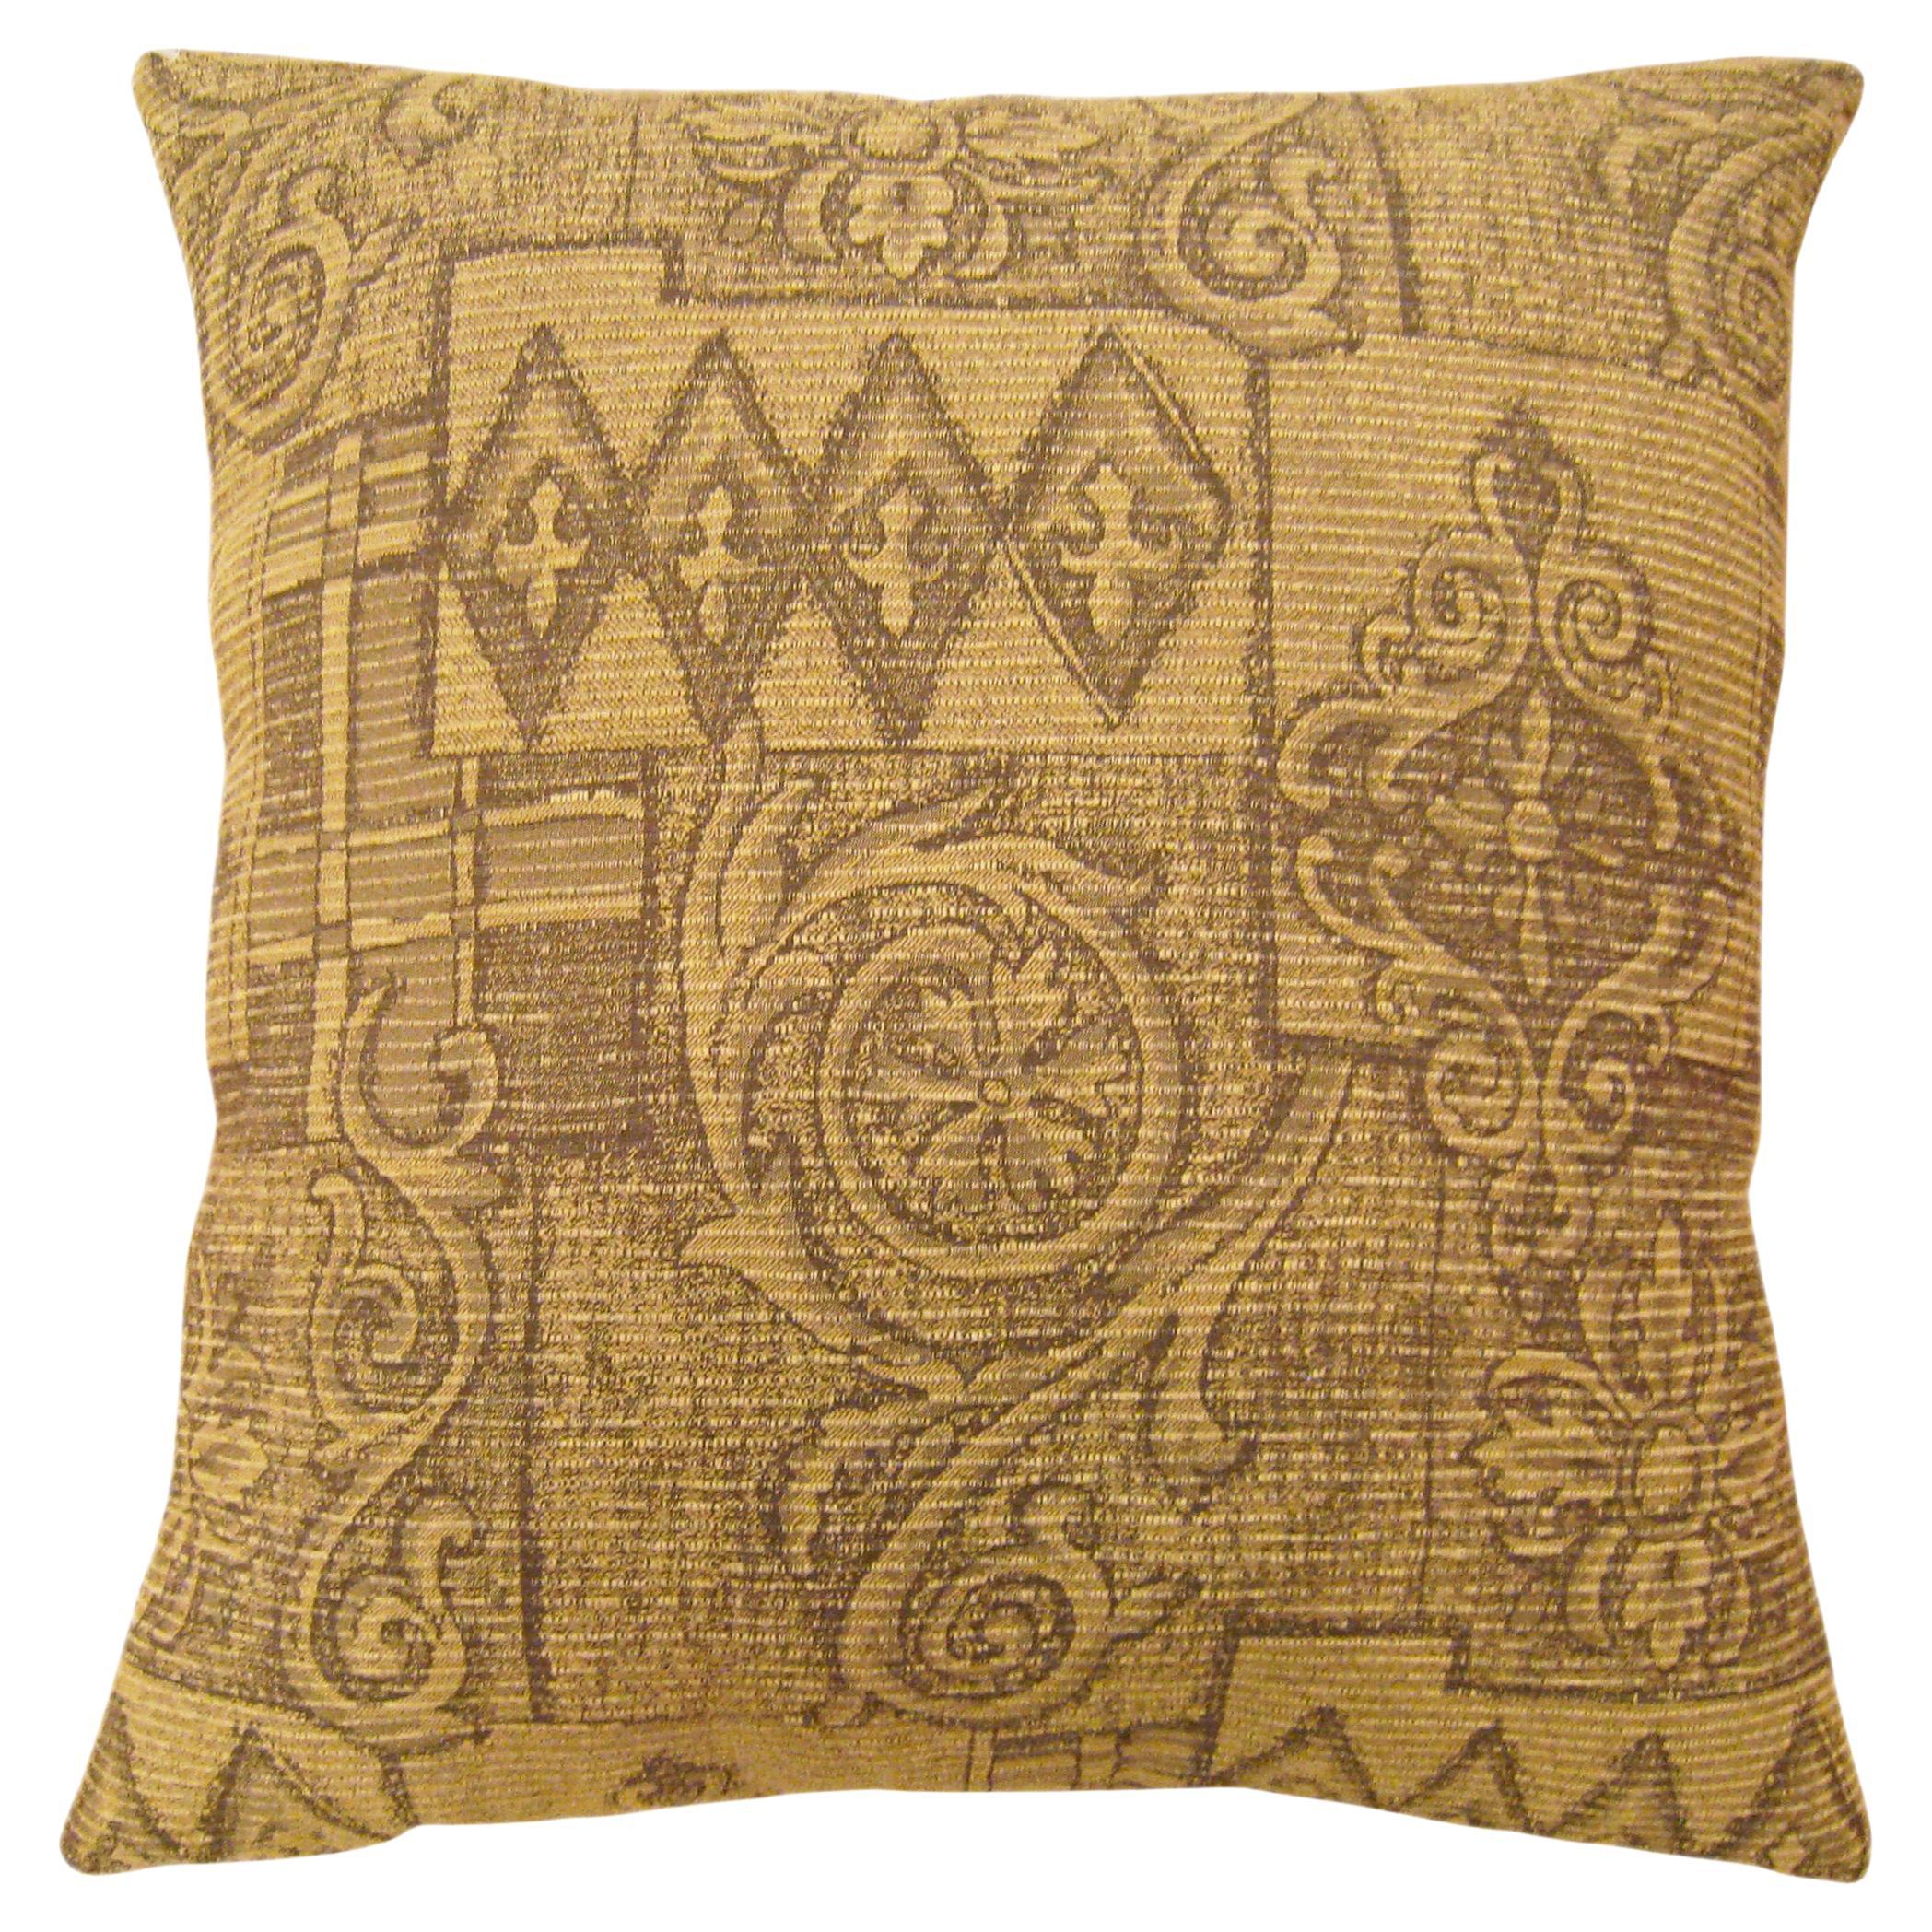 Decorative Vintage Floro-Geometric Fabric Pillow